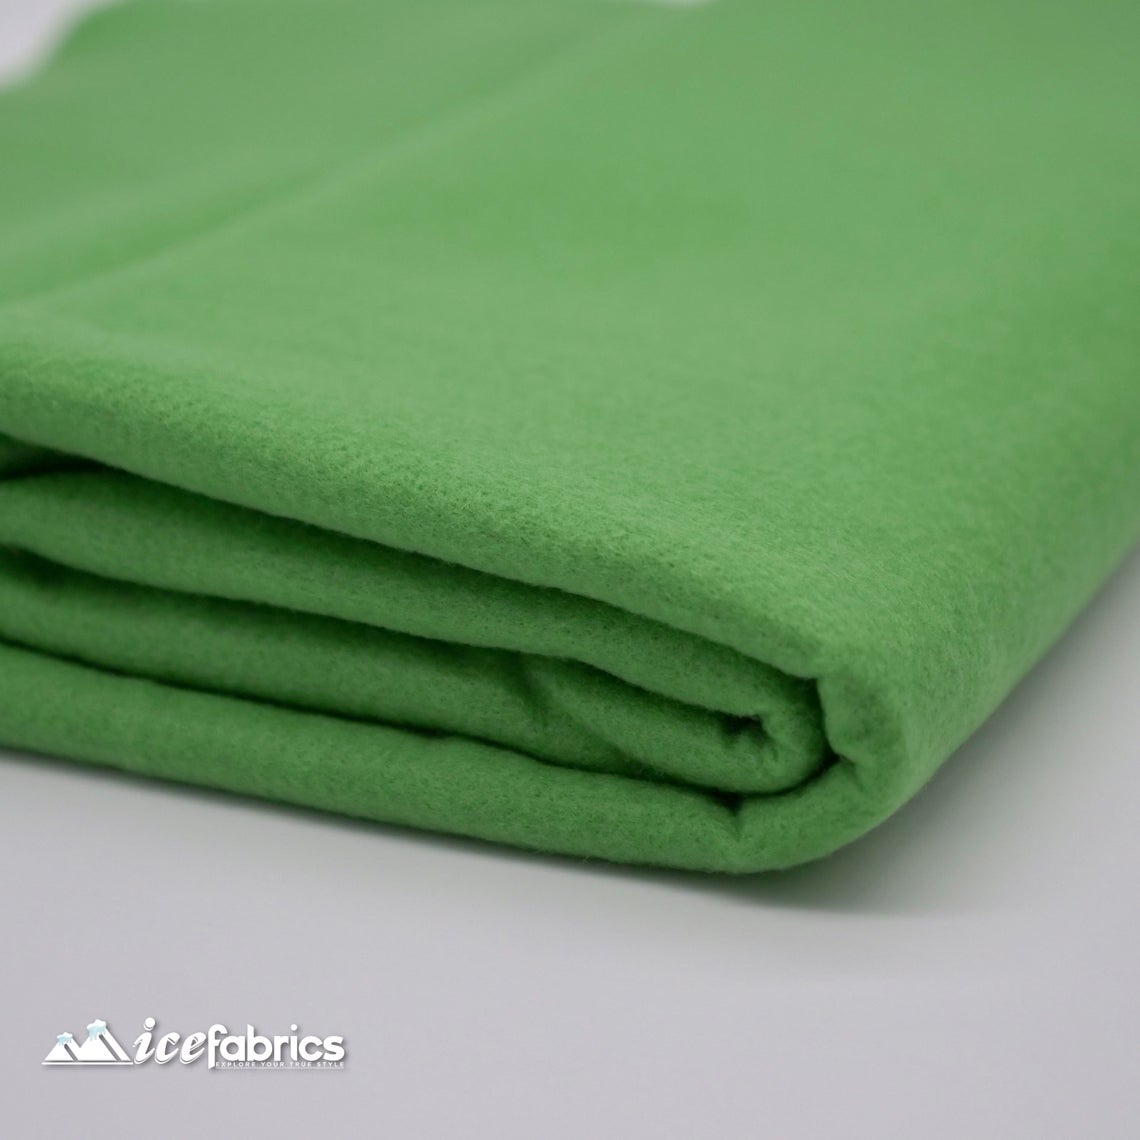 Acrylic Felt Fabric By The Roll | 20 yards | Wholesale Fabric ICE FABRICS Lime Green